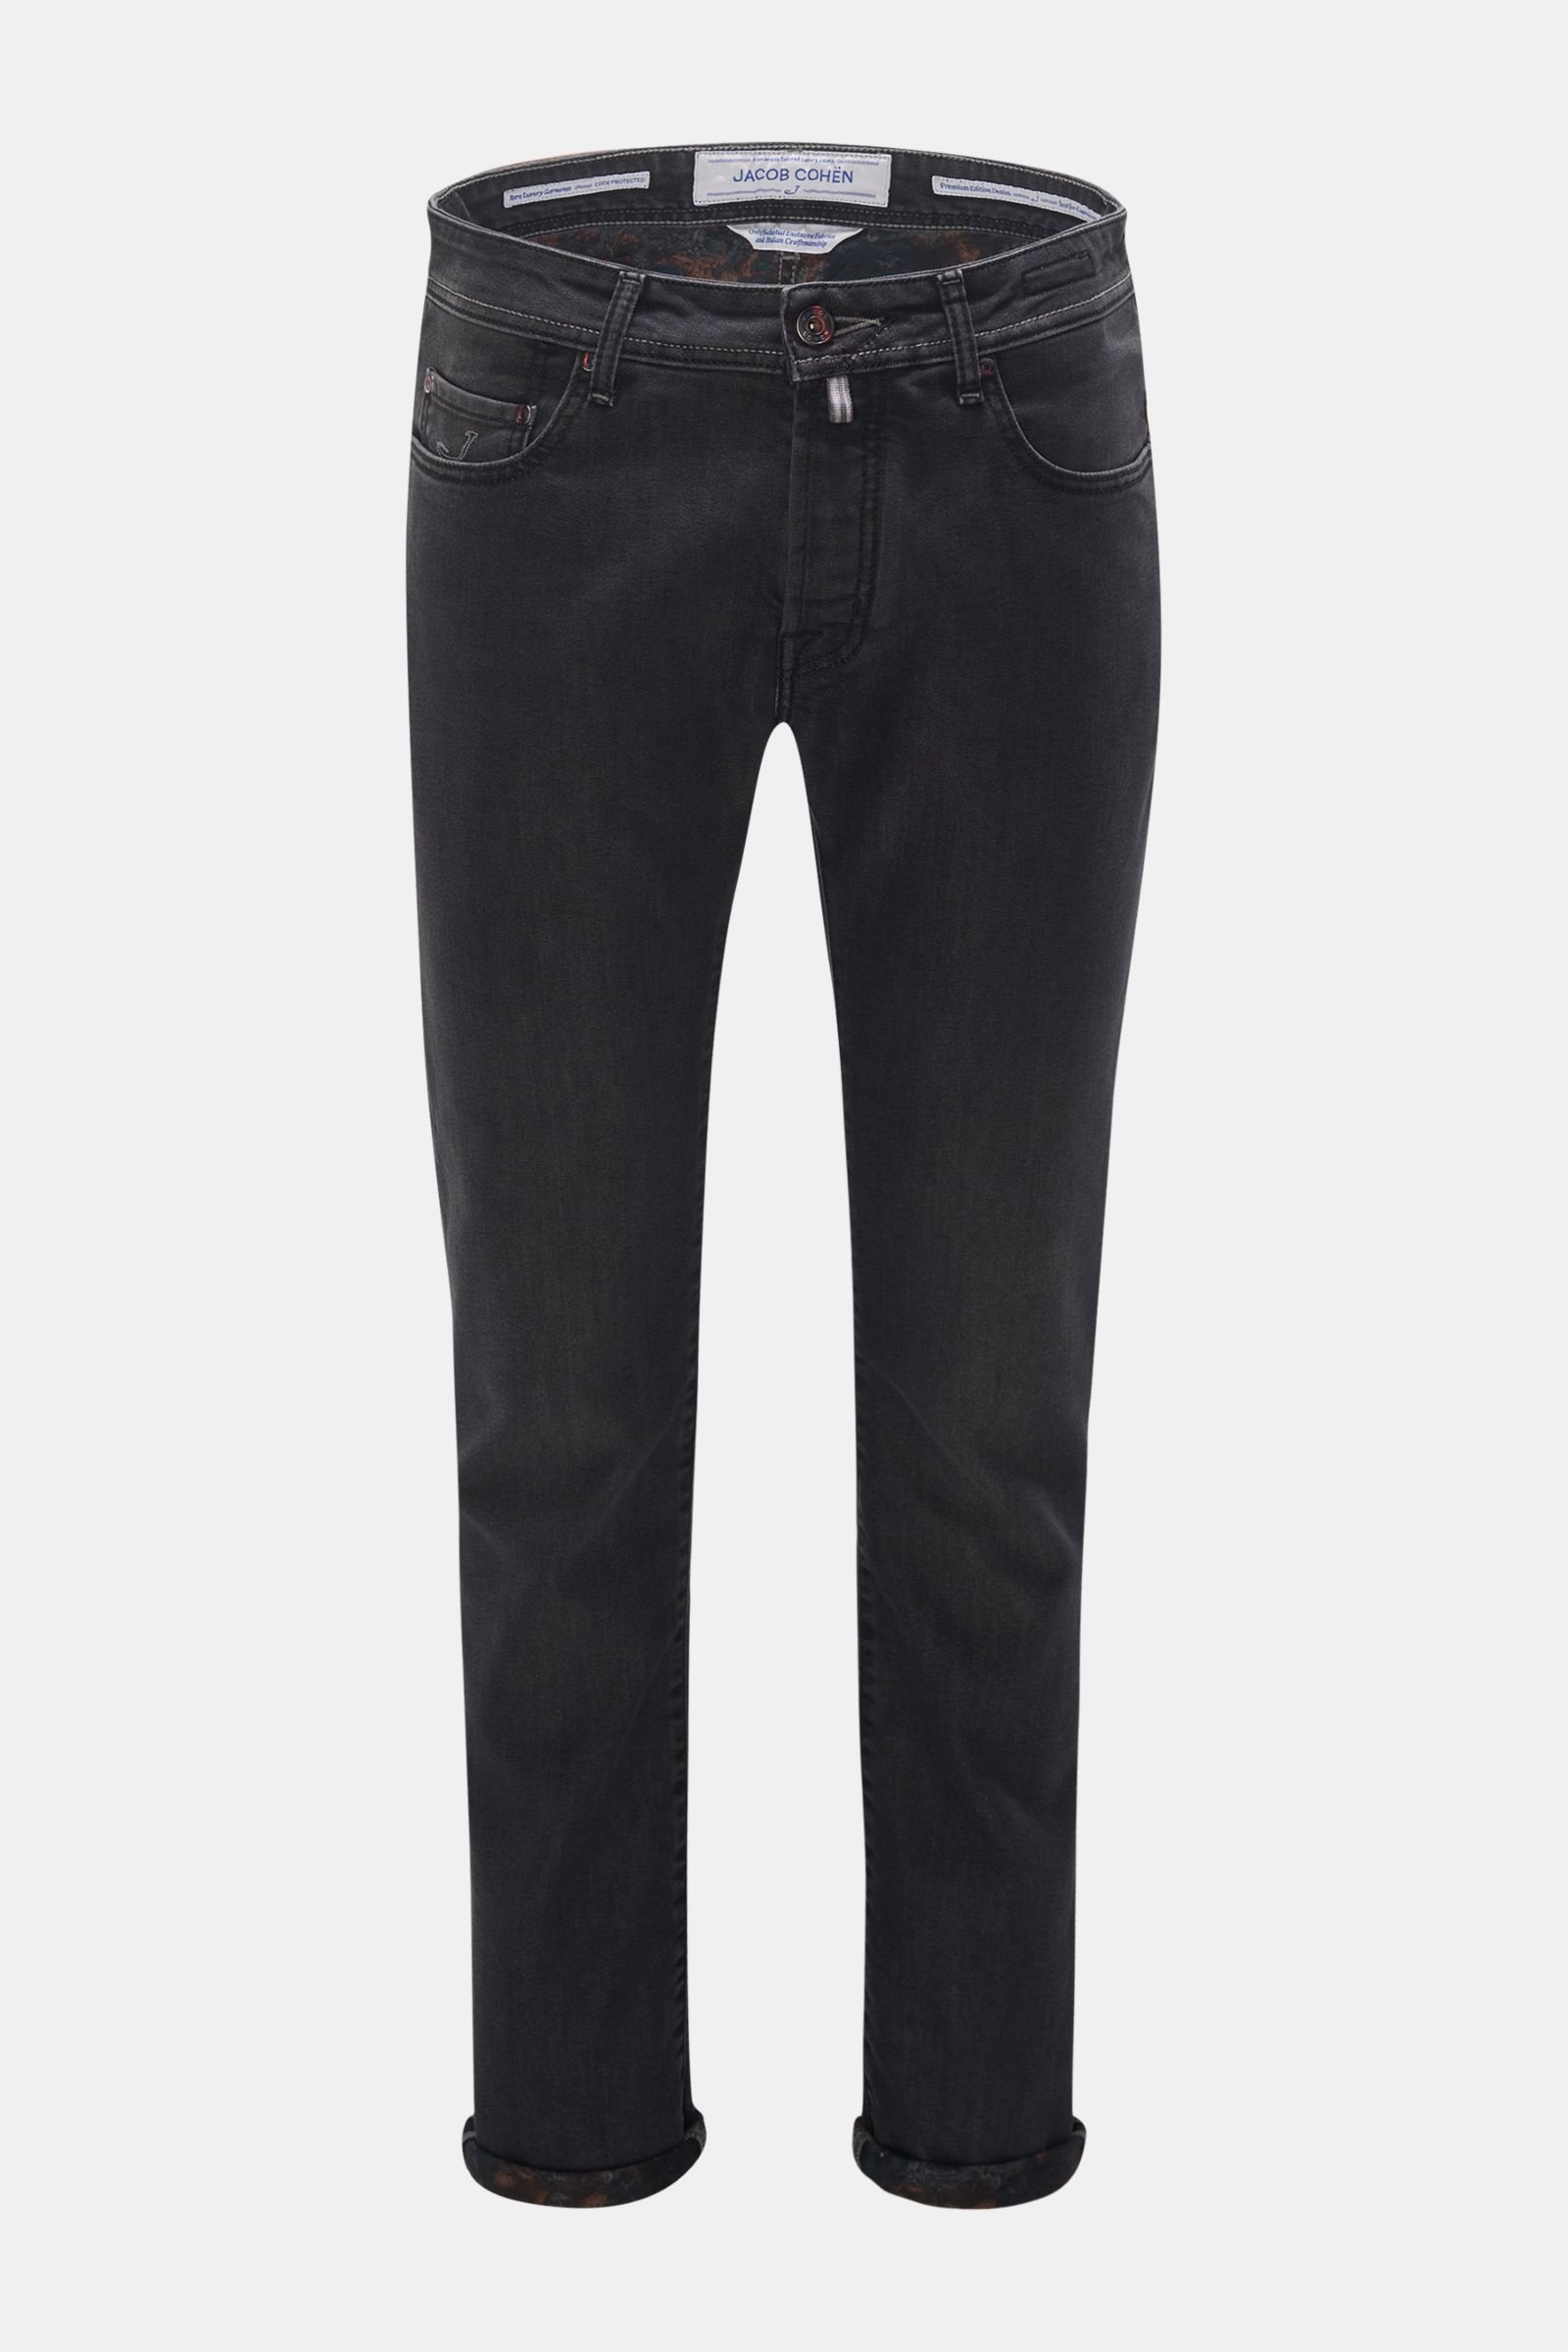 Jeans 'J688 Comfort Slim Fit' anthracite